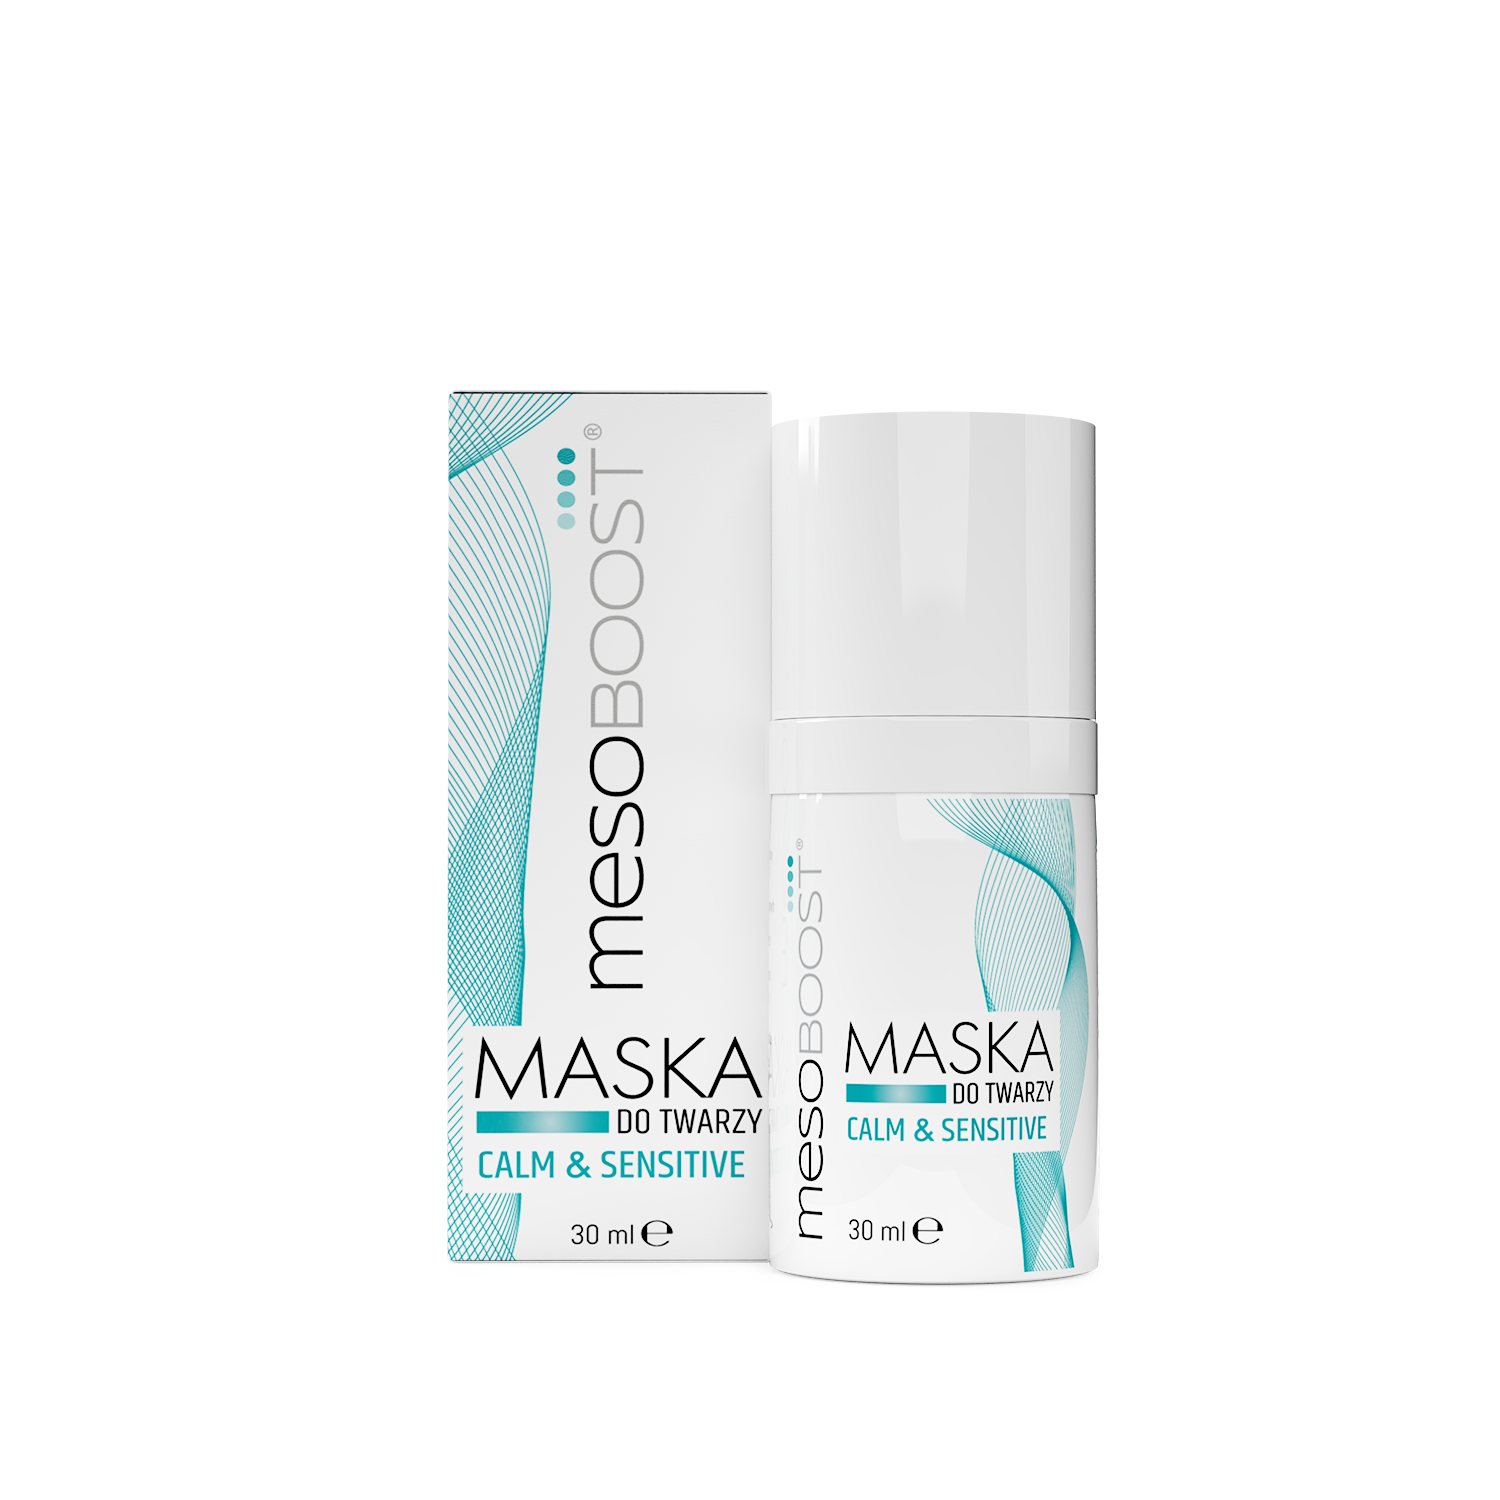 Маска для лица Mesoboost Calm&Sensitive, 30 мл крем маска для лица шеи и декольте loen night saturation hyaluronic